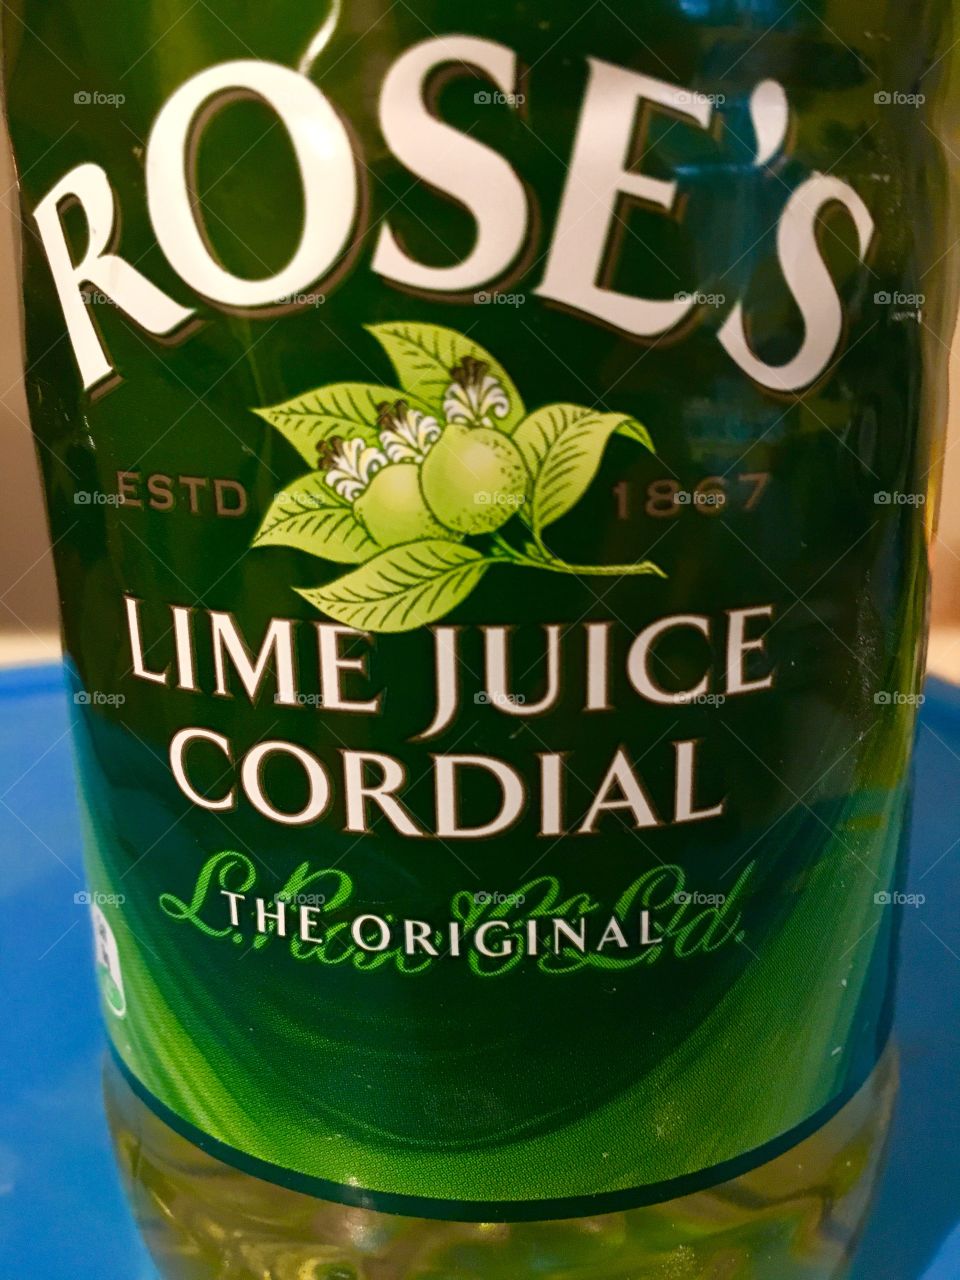 Lime cordial juice